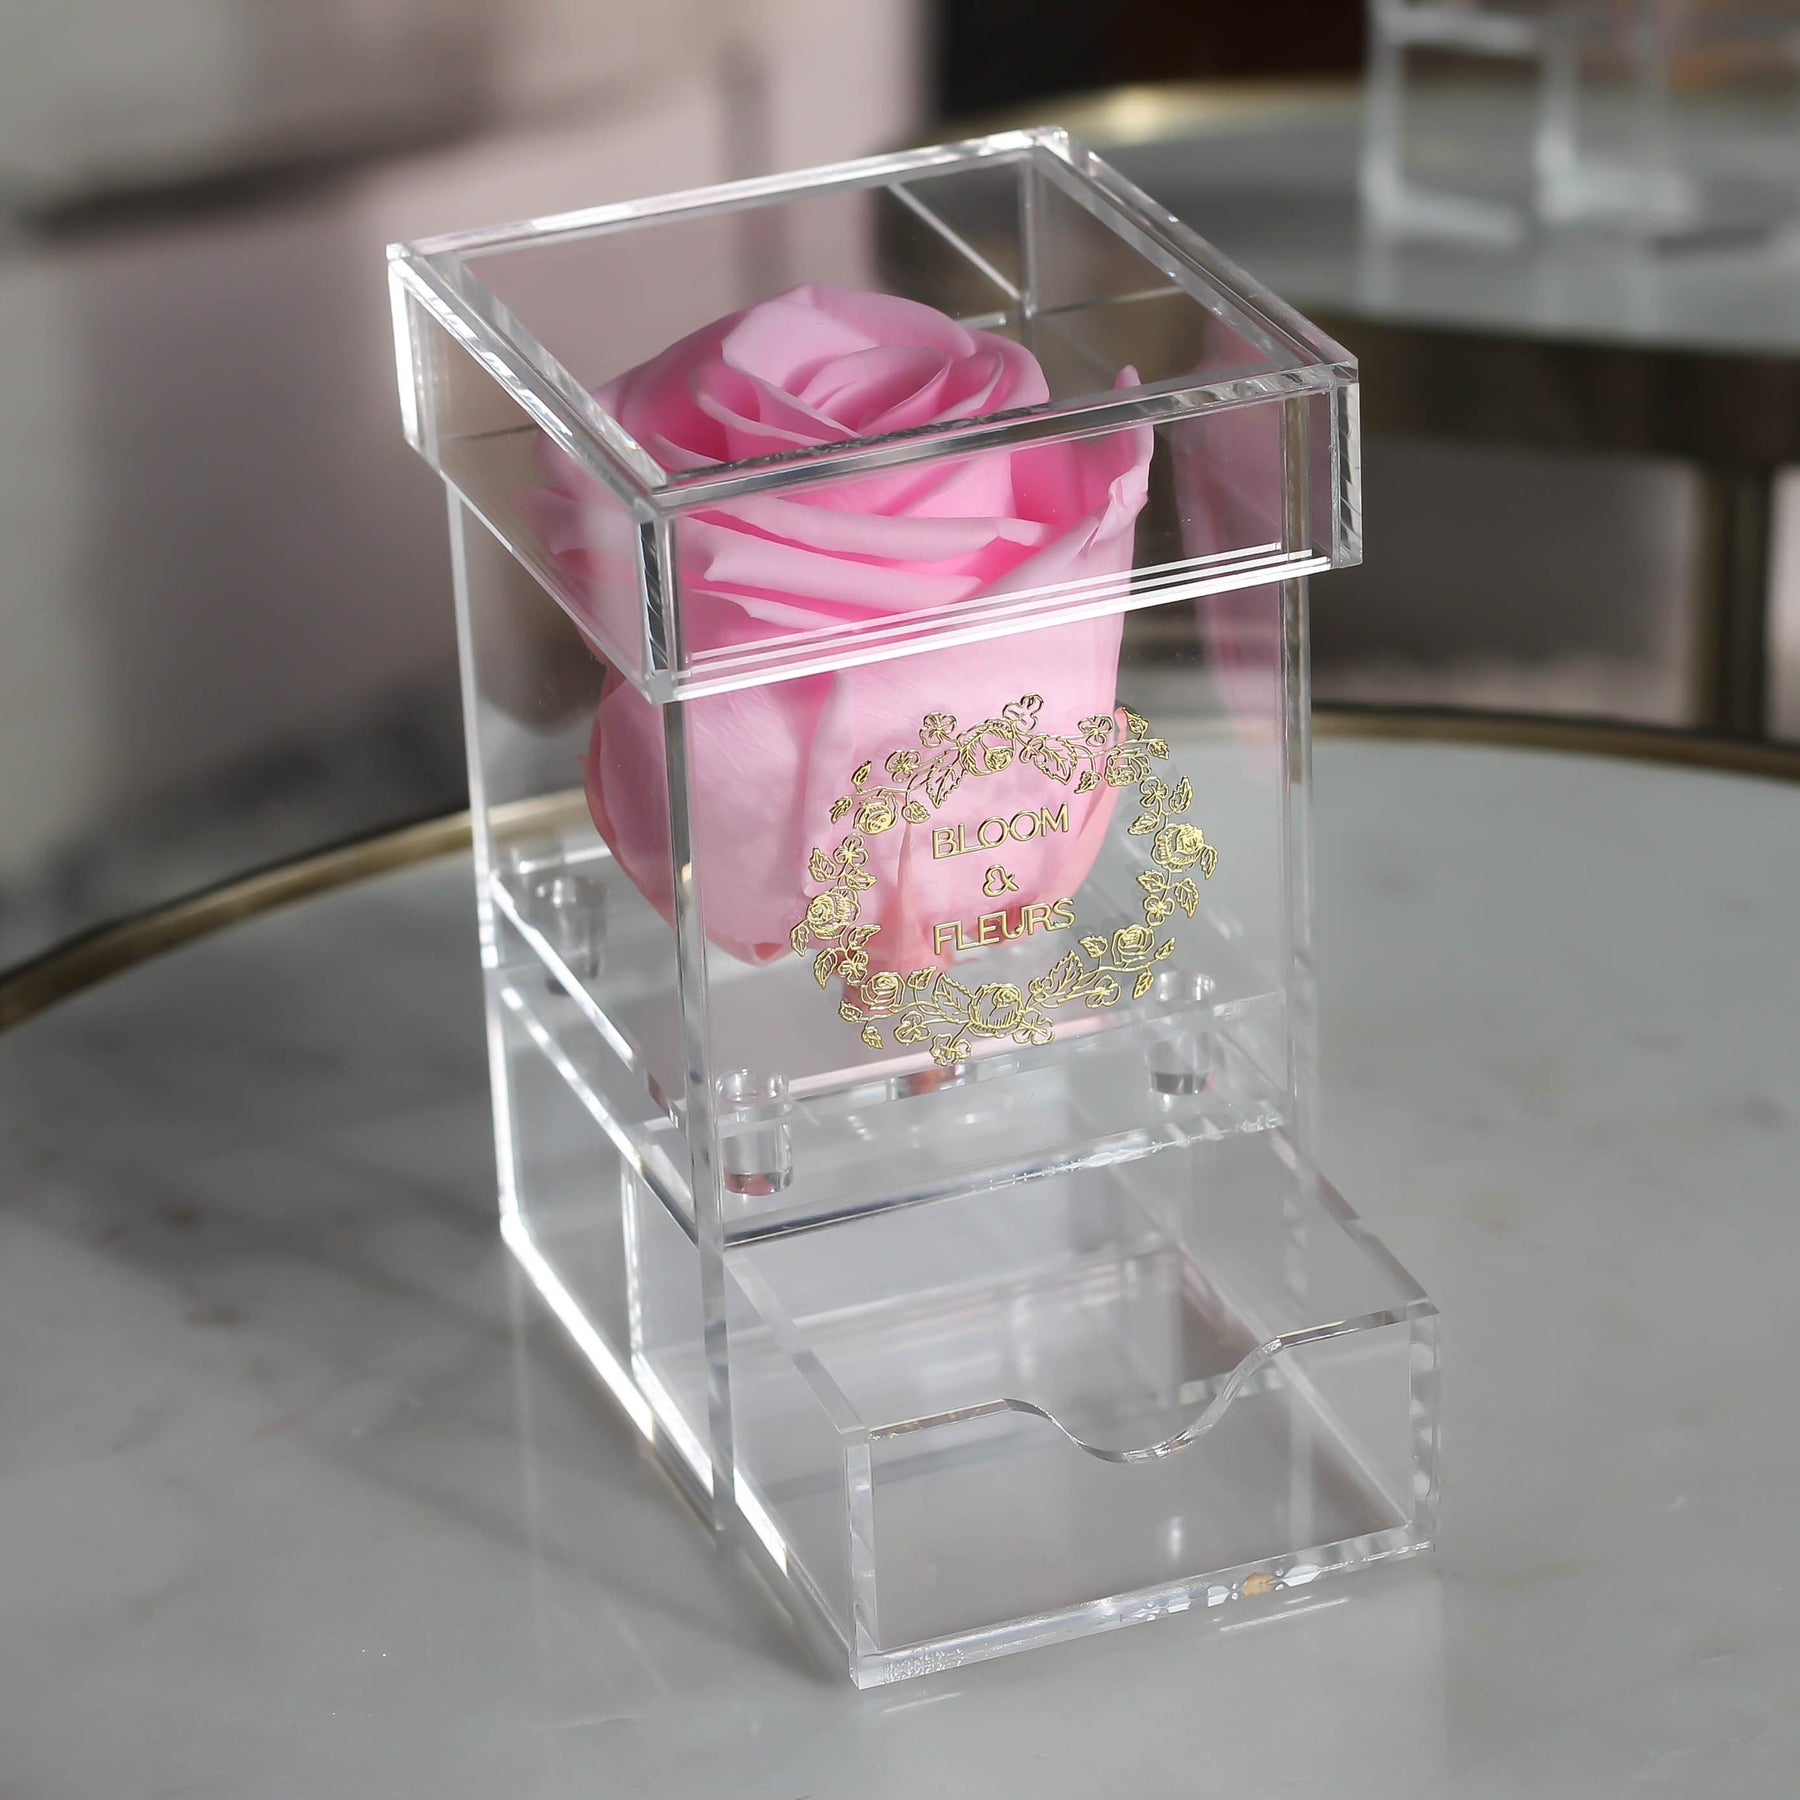 Louboutin Red Eternity Roses - Acrylic Box